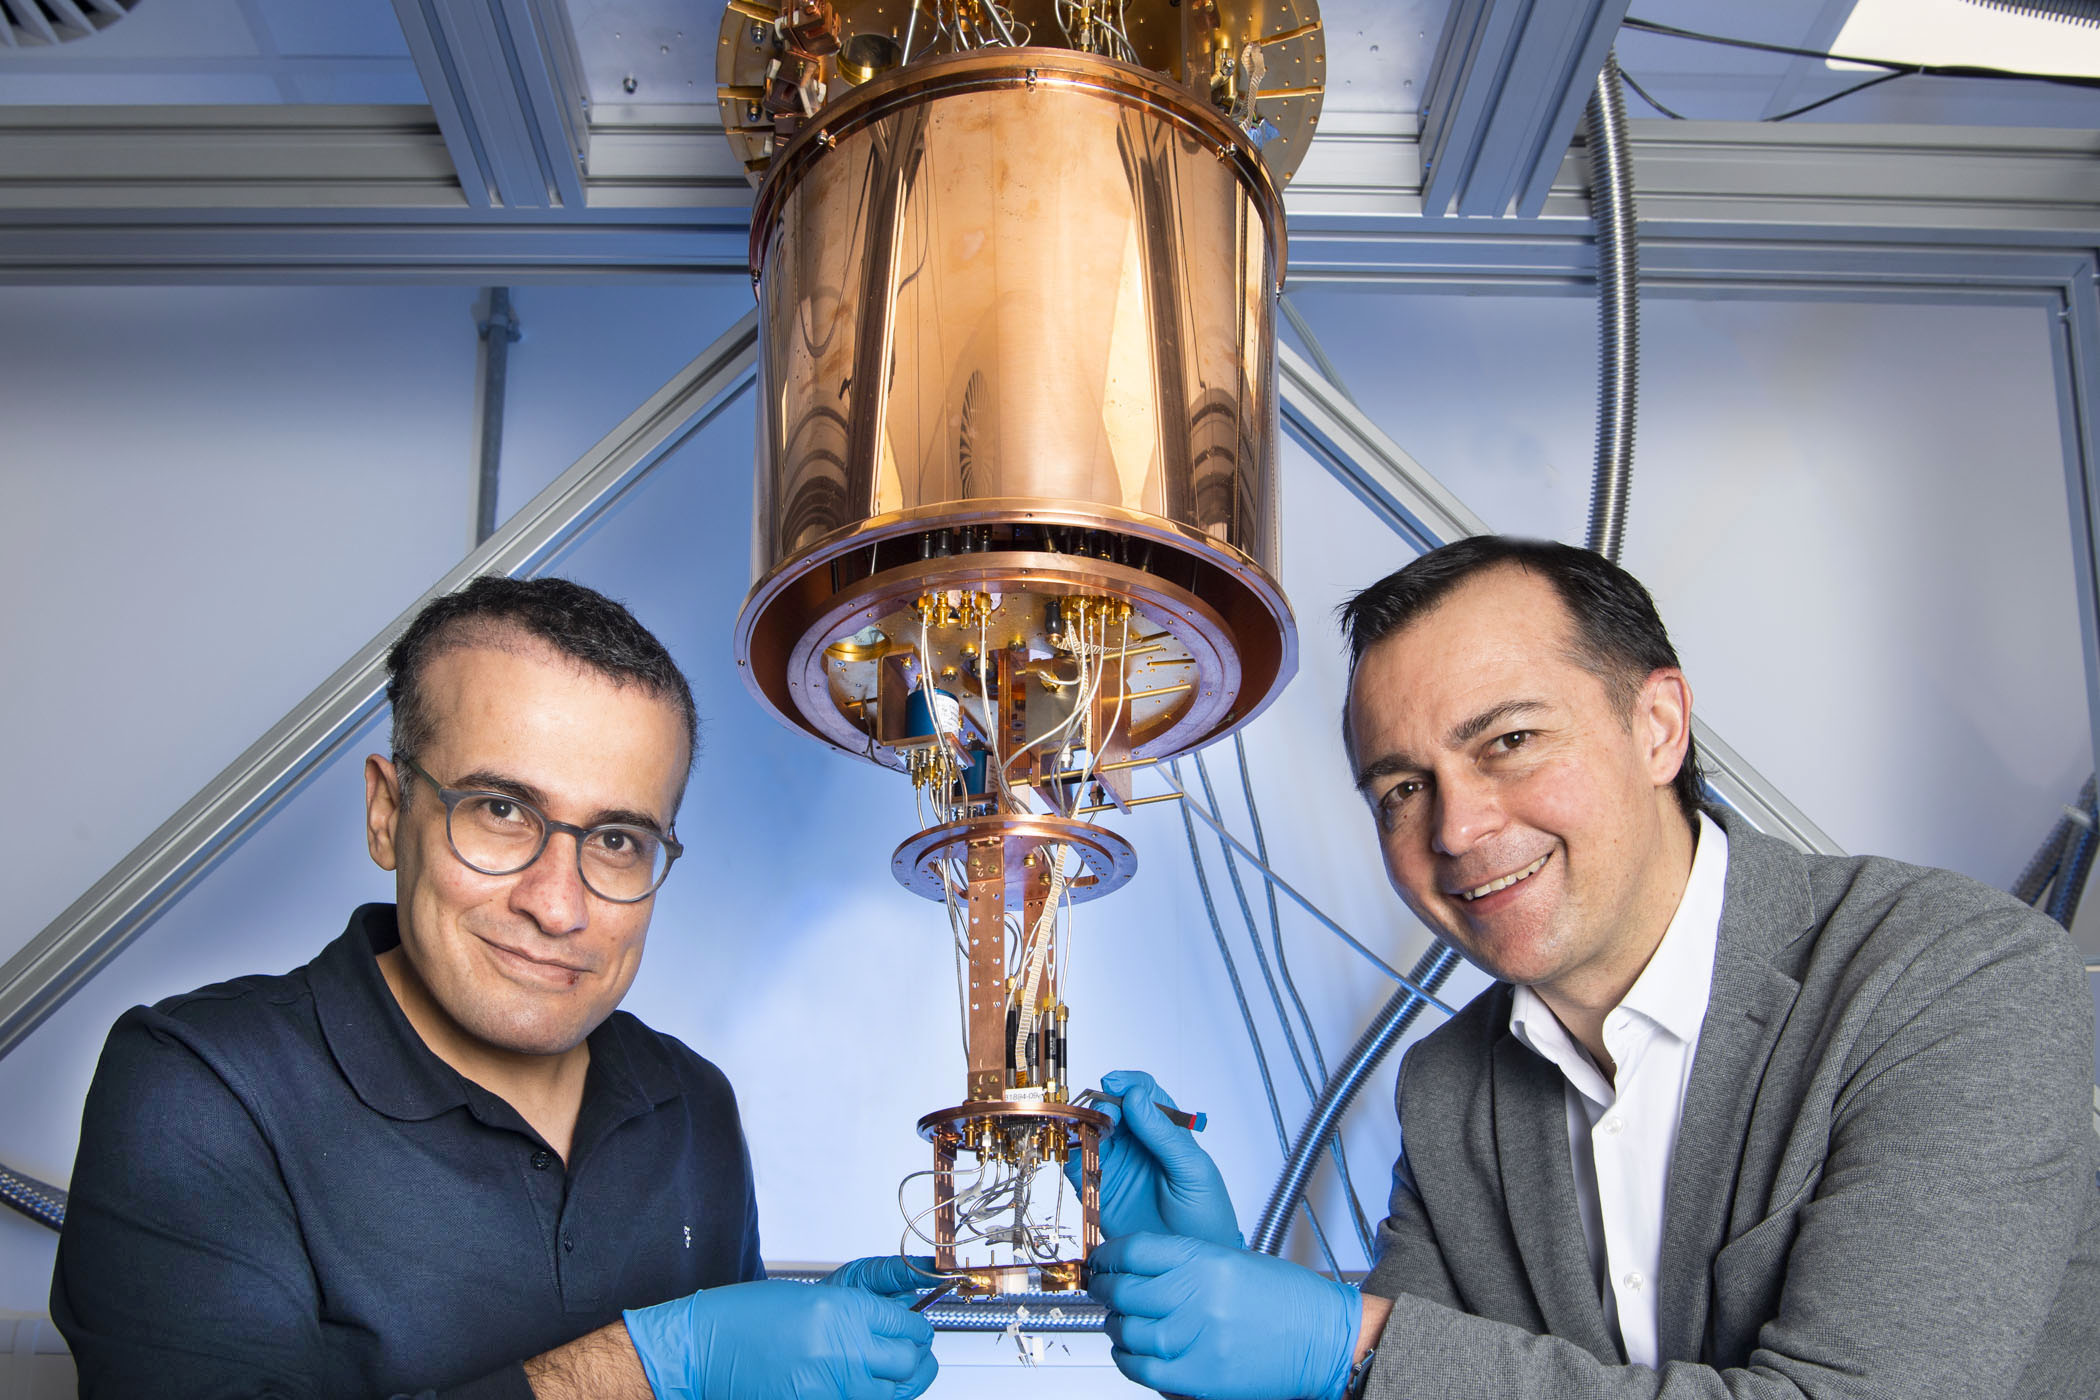 Dr Hadi Heidari (left) and Professor Martin Weides (right) of the University of Glasgow’s James Watt School of Engineering work on some of their quantum computing equipment.